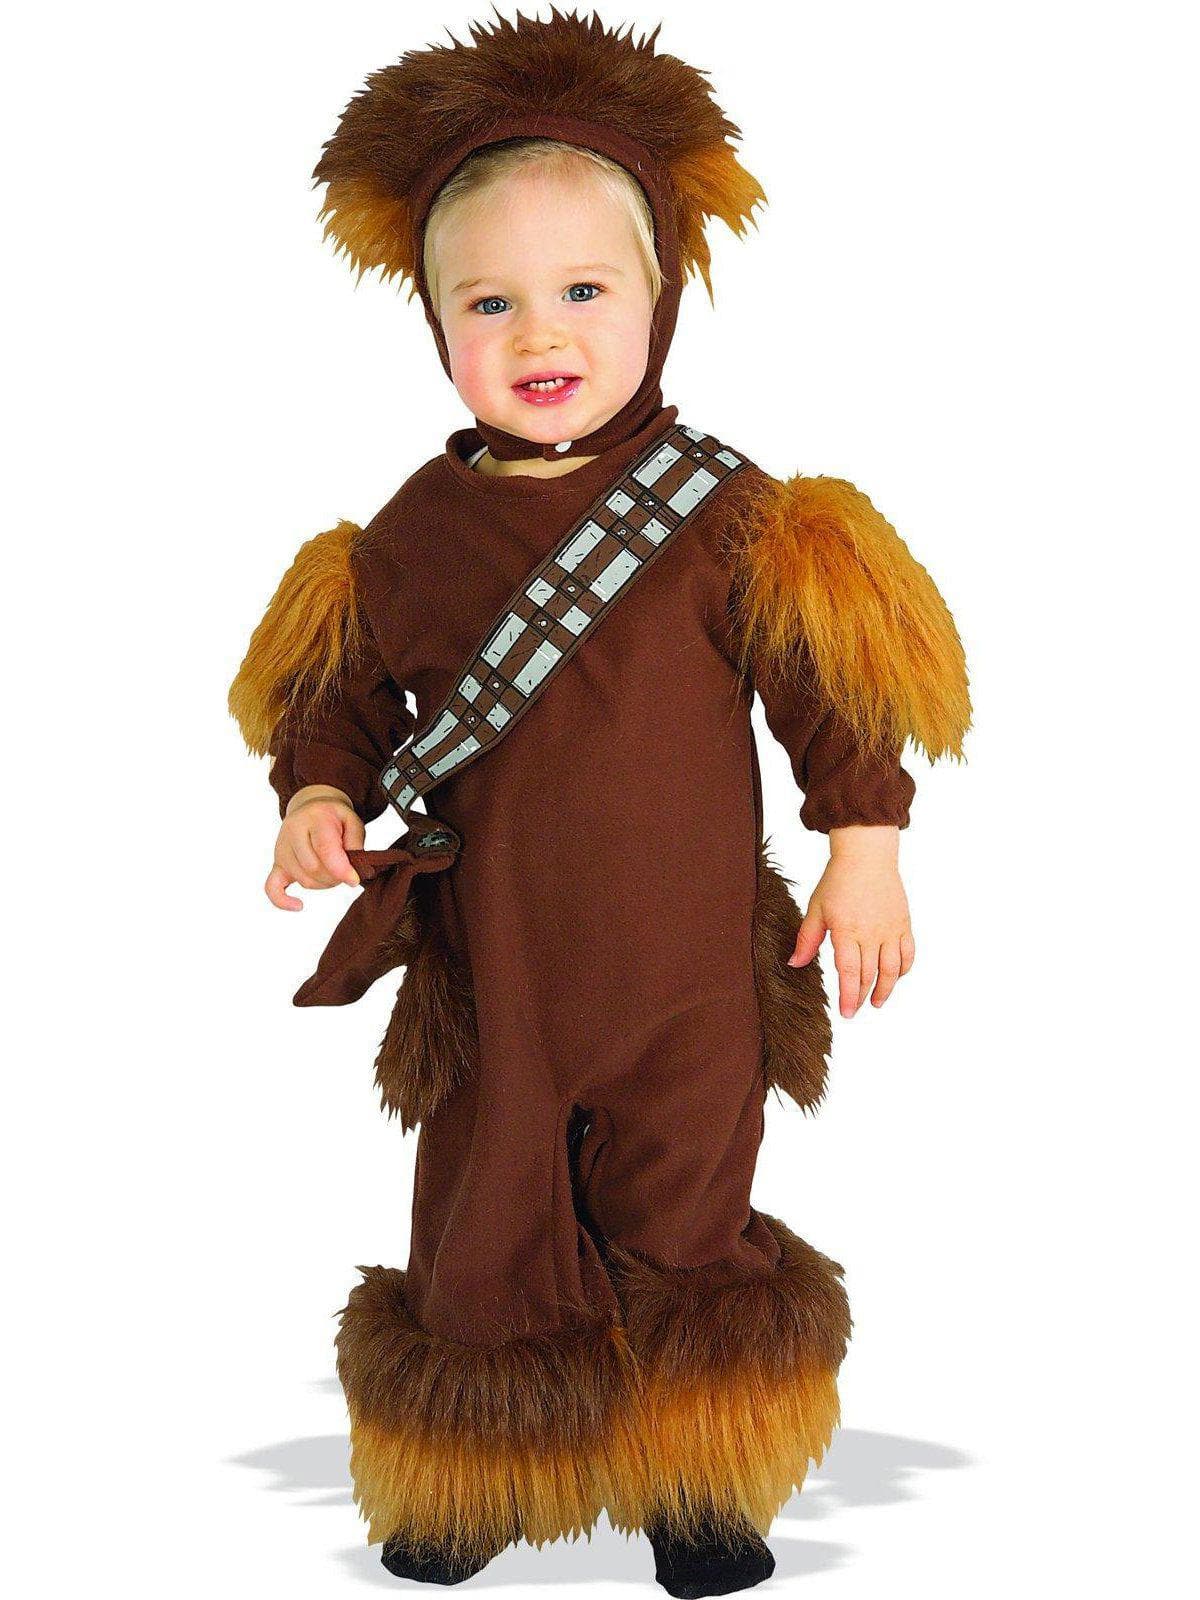 Kid's Classic Star Wars Chewbacca Costume - costumes.com